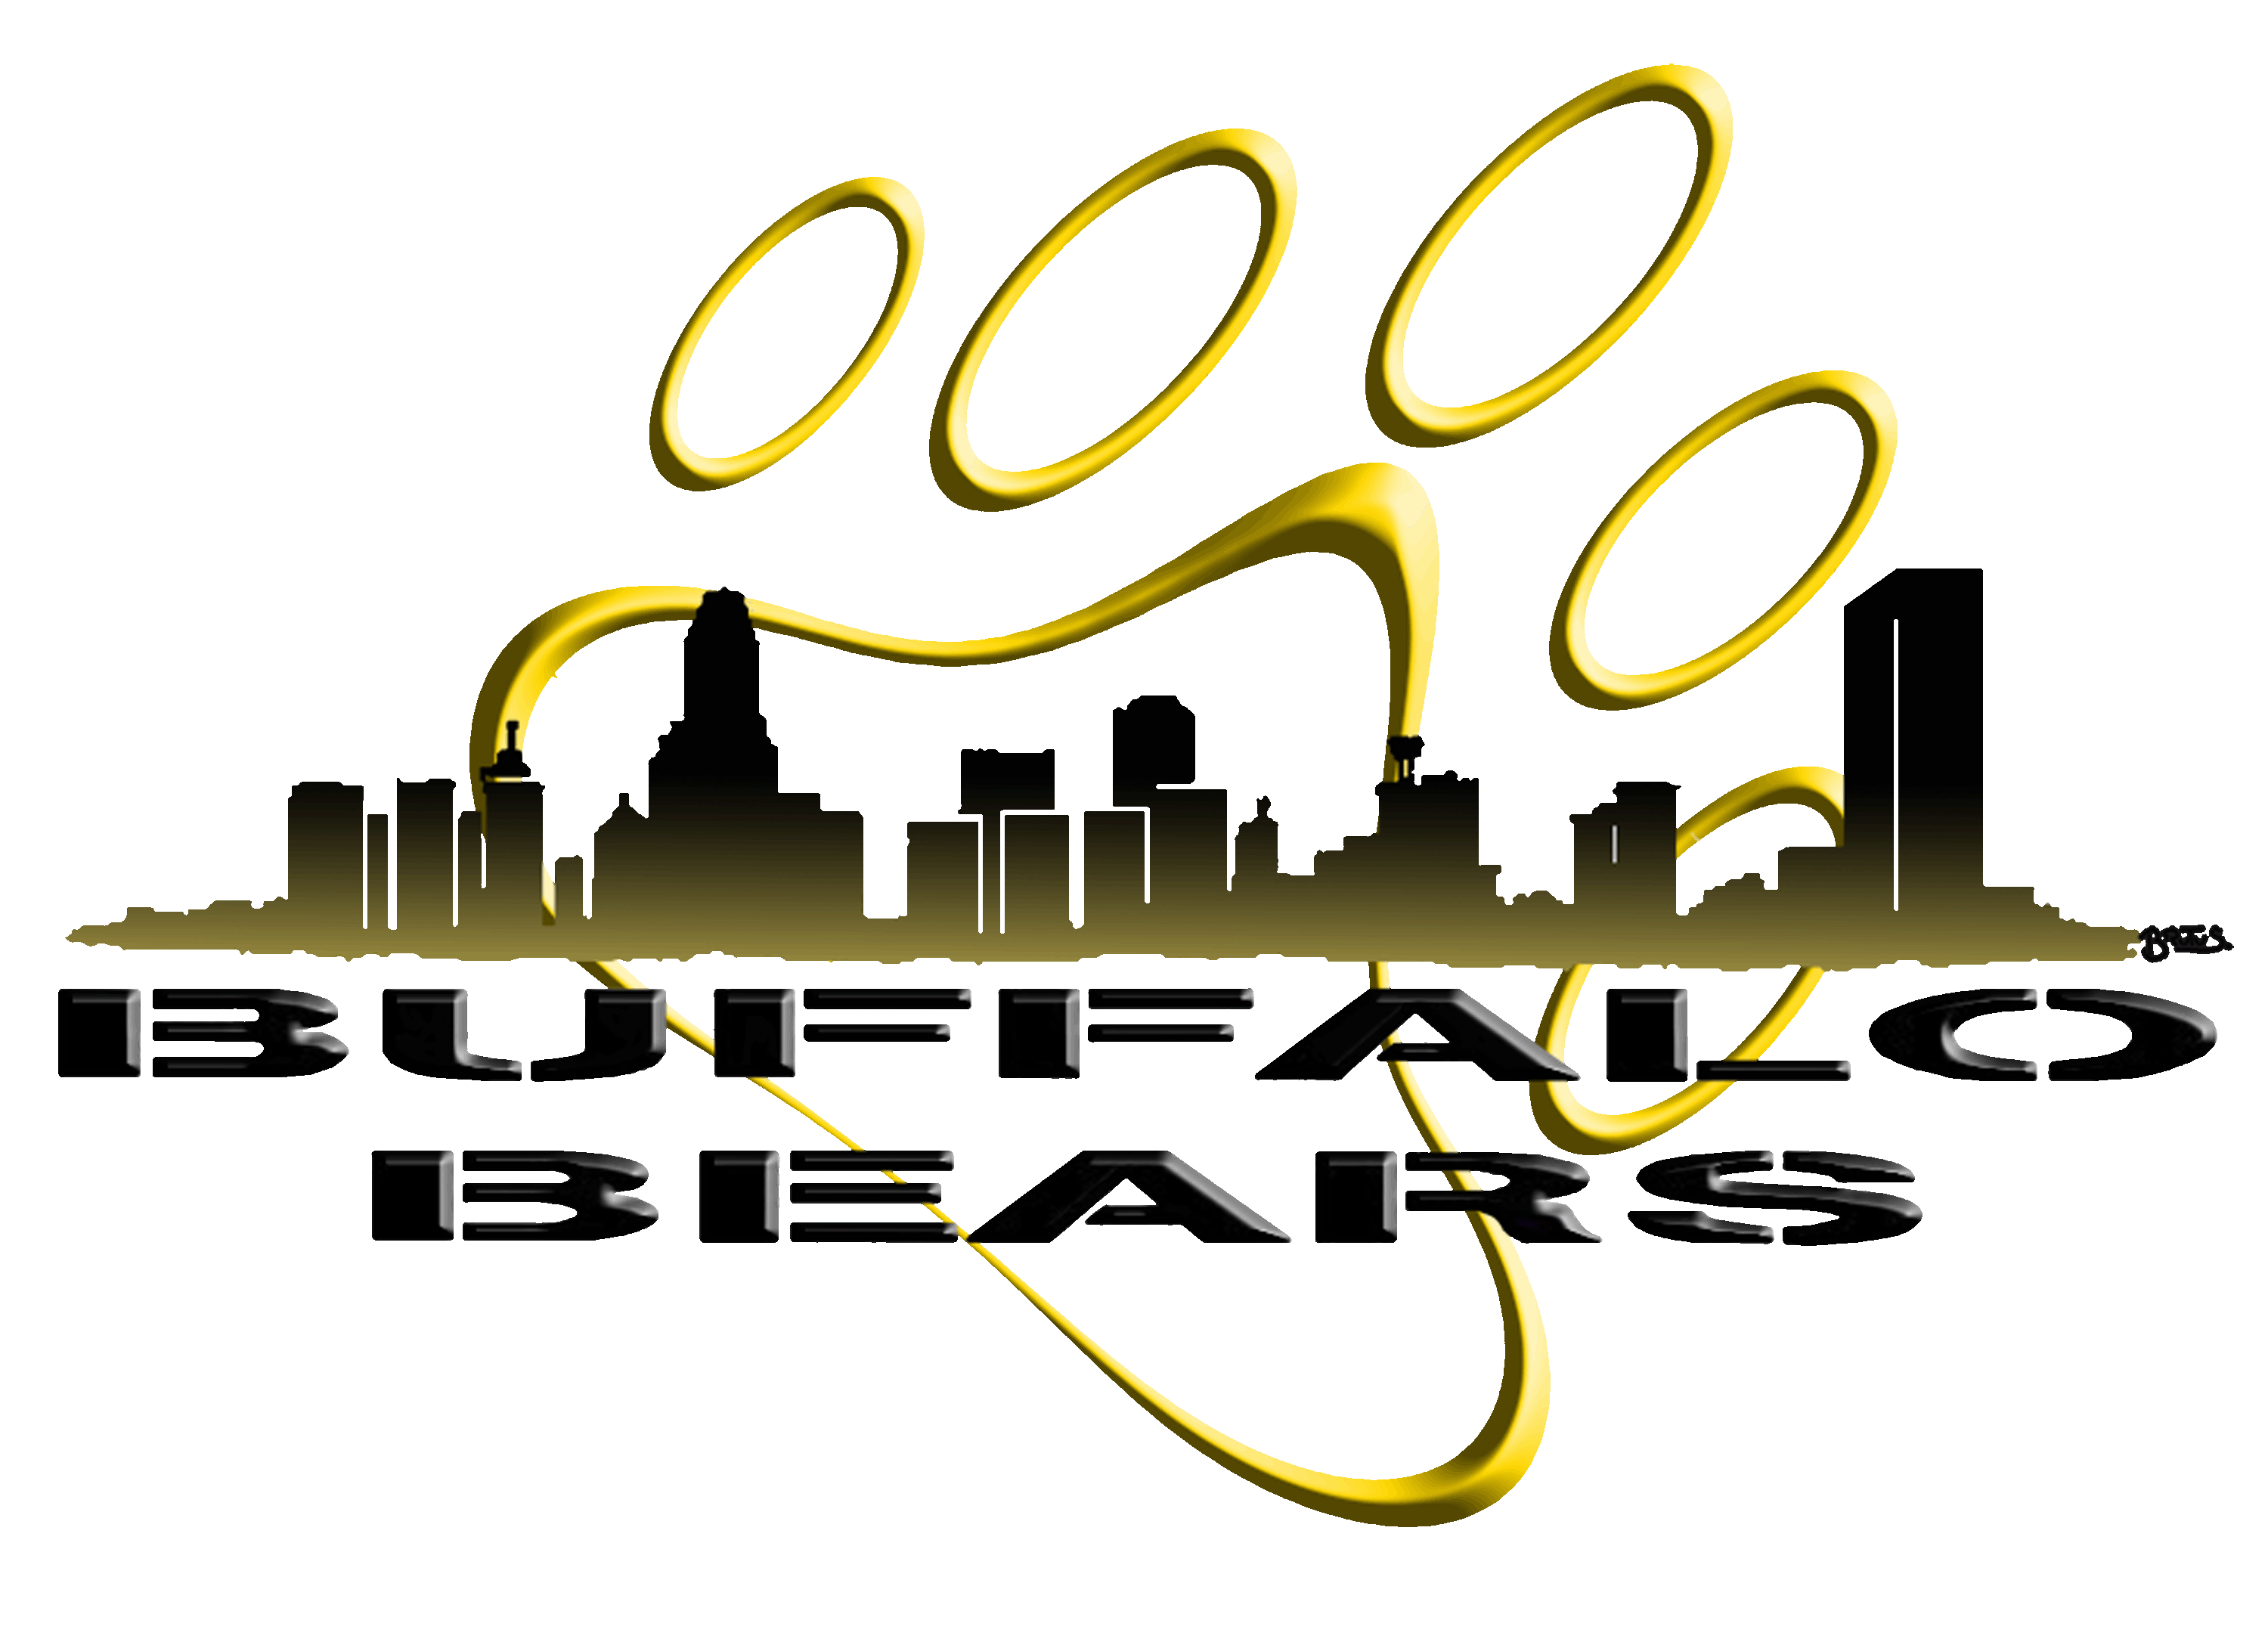 Buffalo Bears logo.